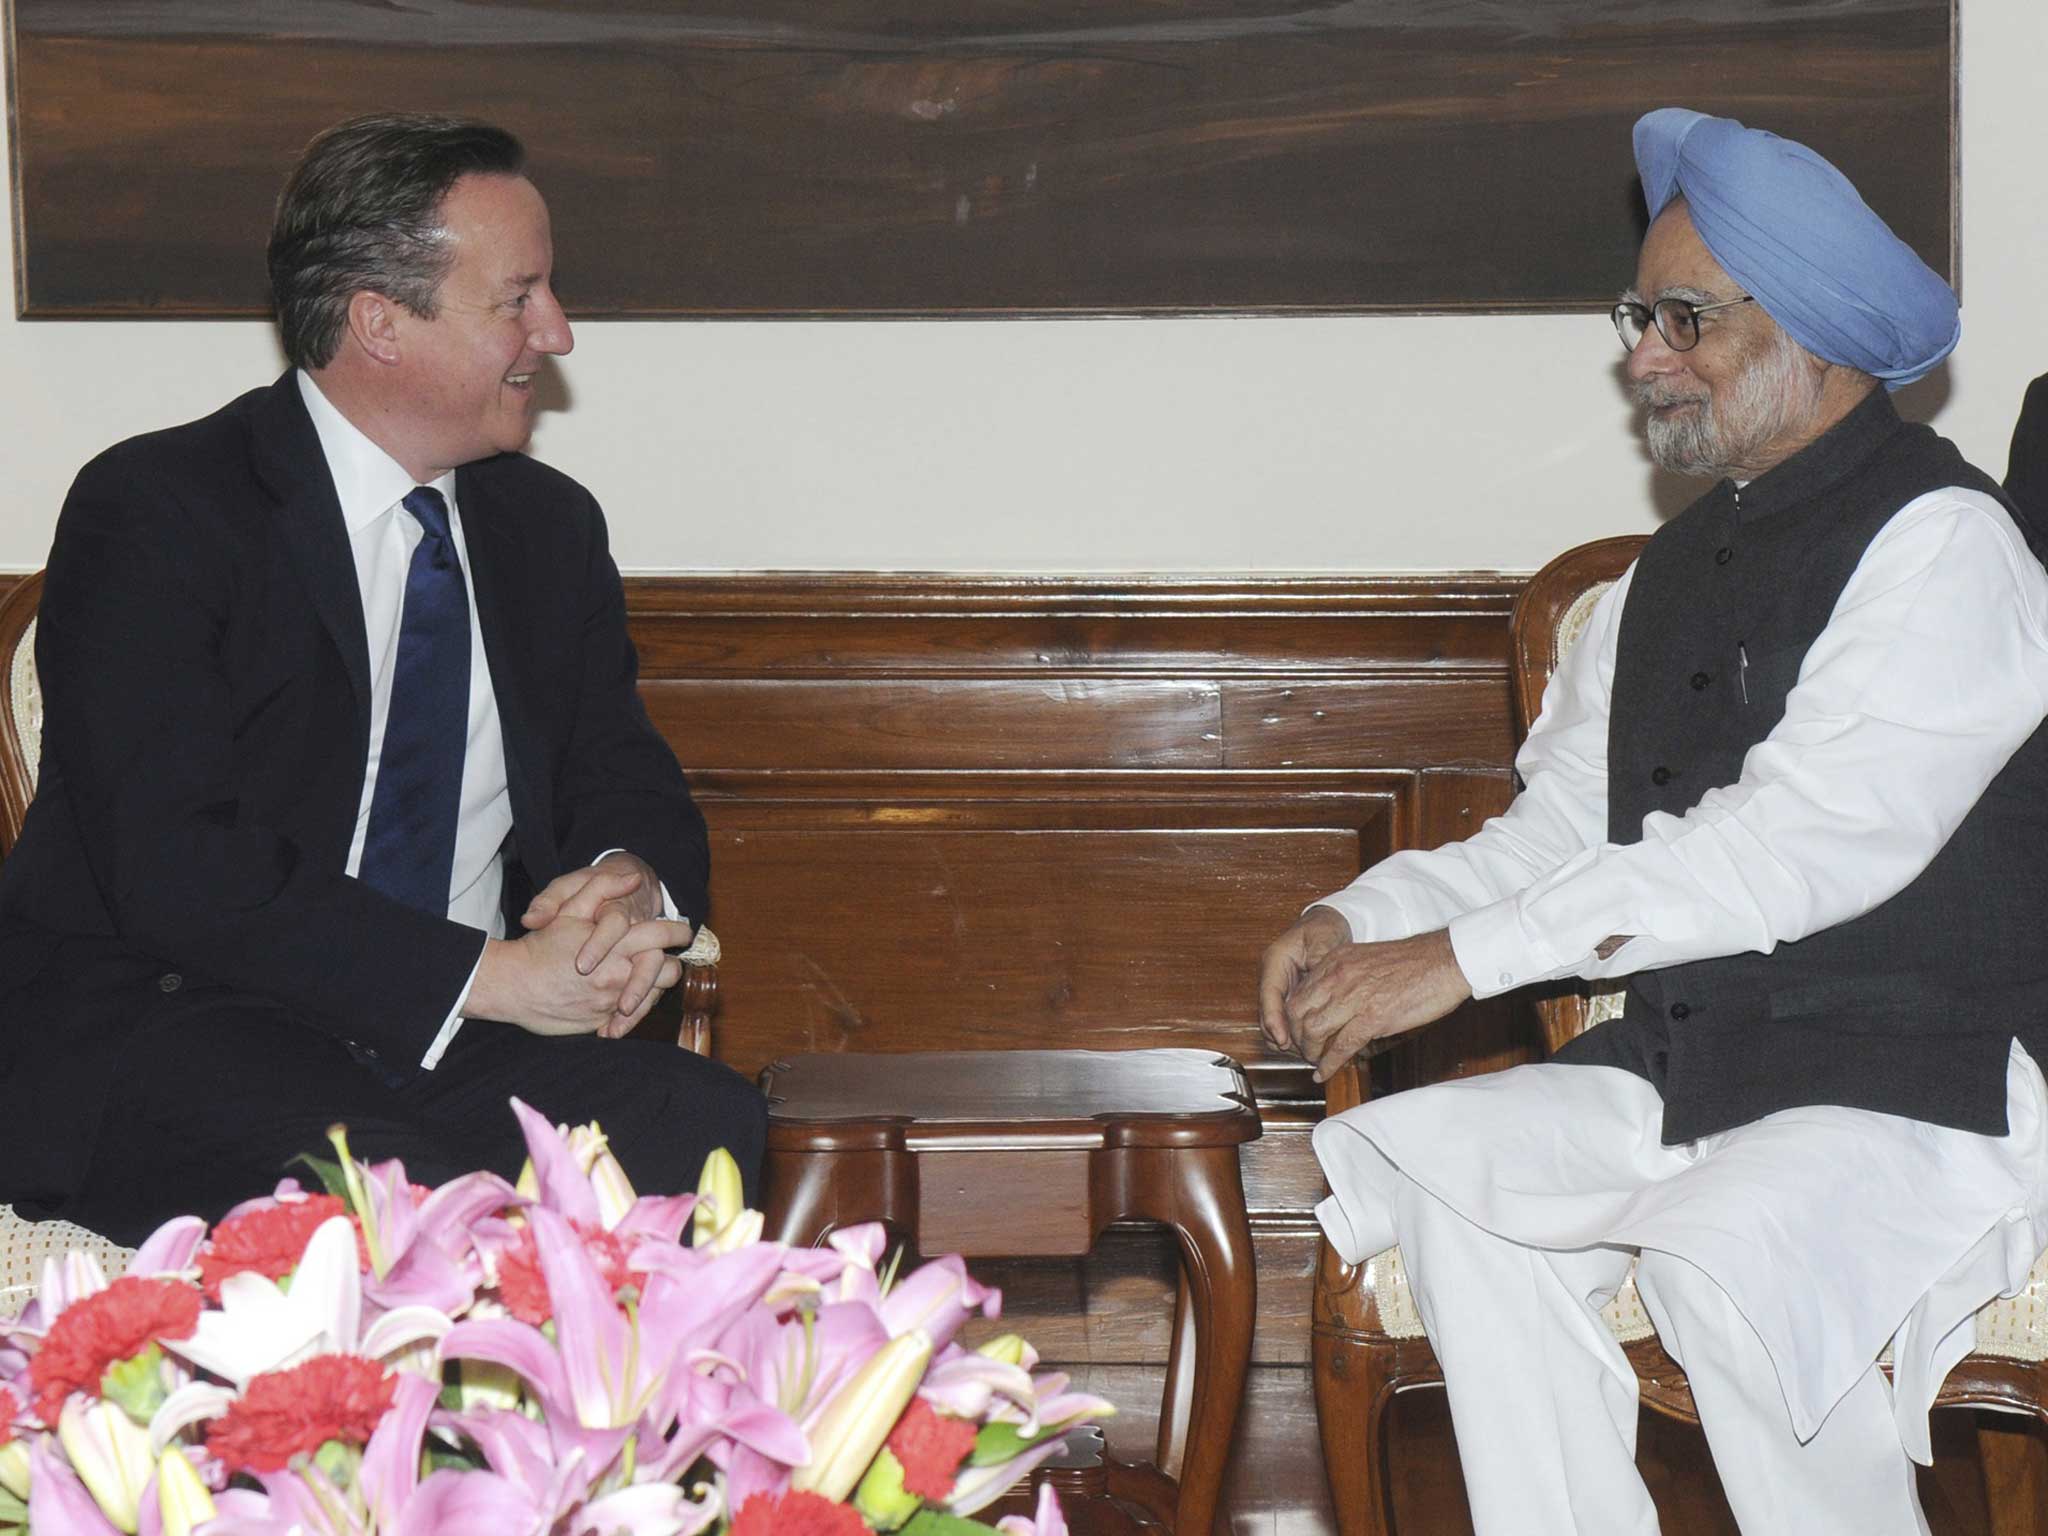 David Cameron speaks with India's Prime Minister Manmohan Singh in New Delhi